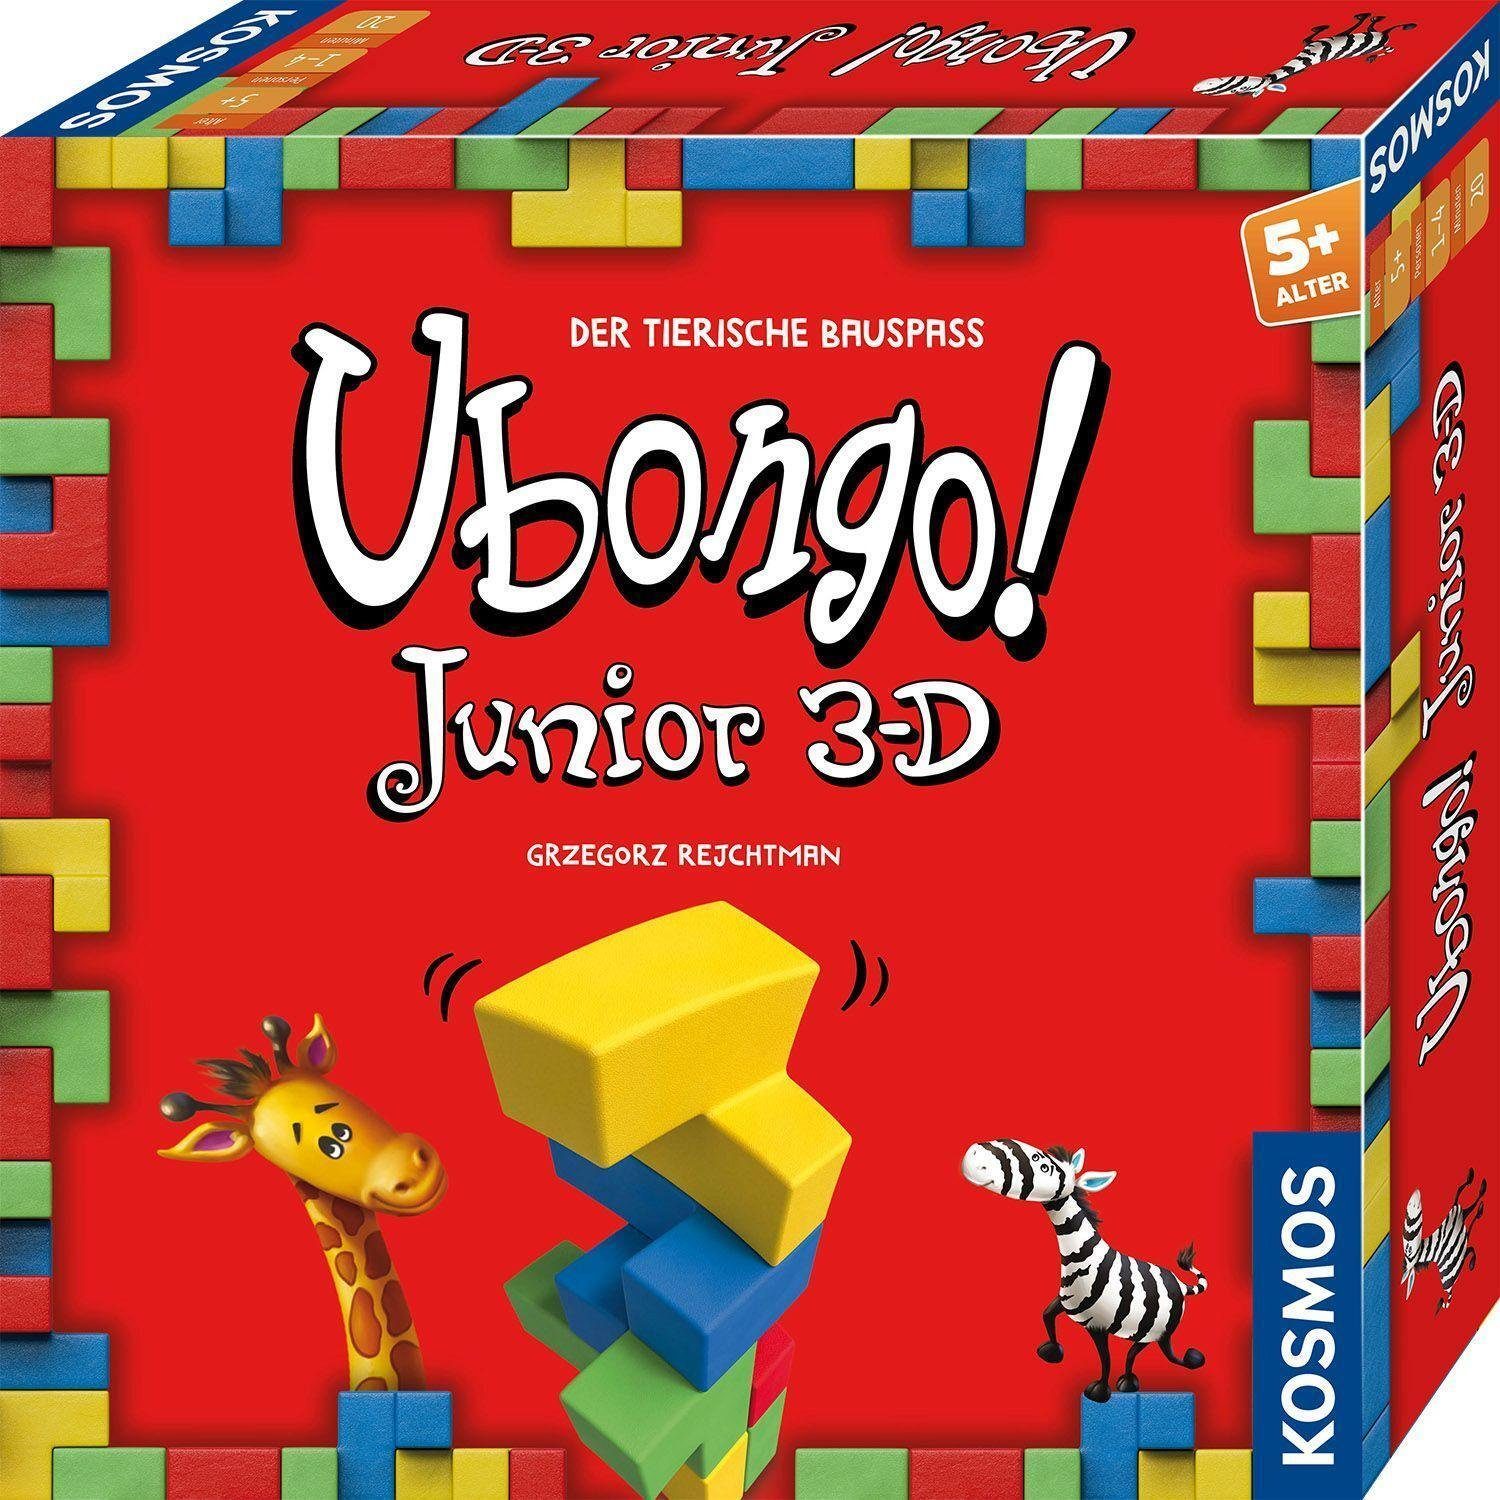 Spiel, Kosmos Junior 3-D Ubongo